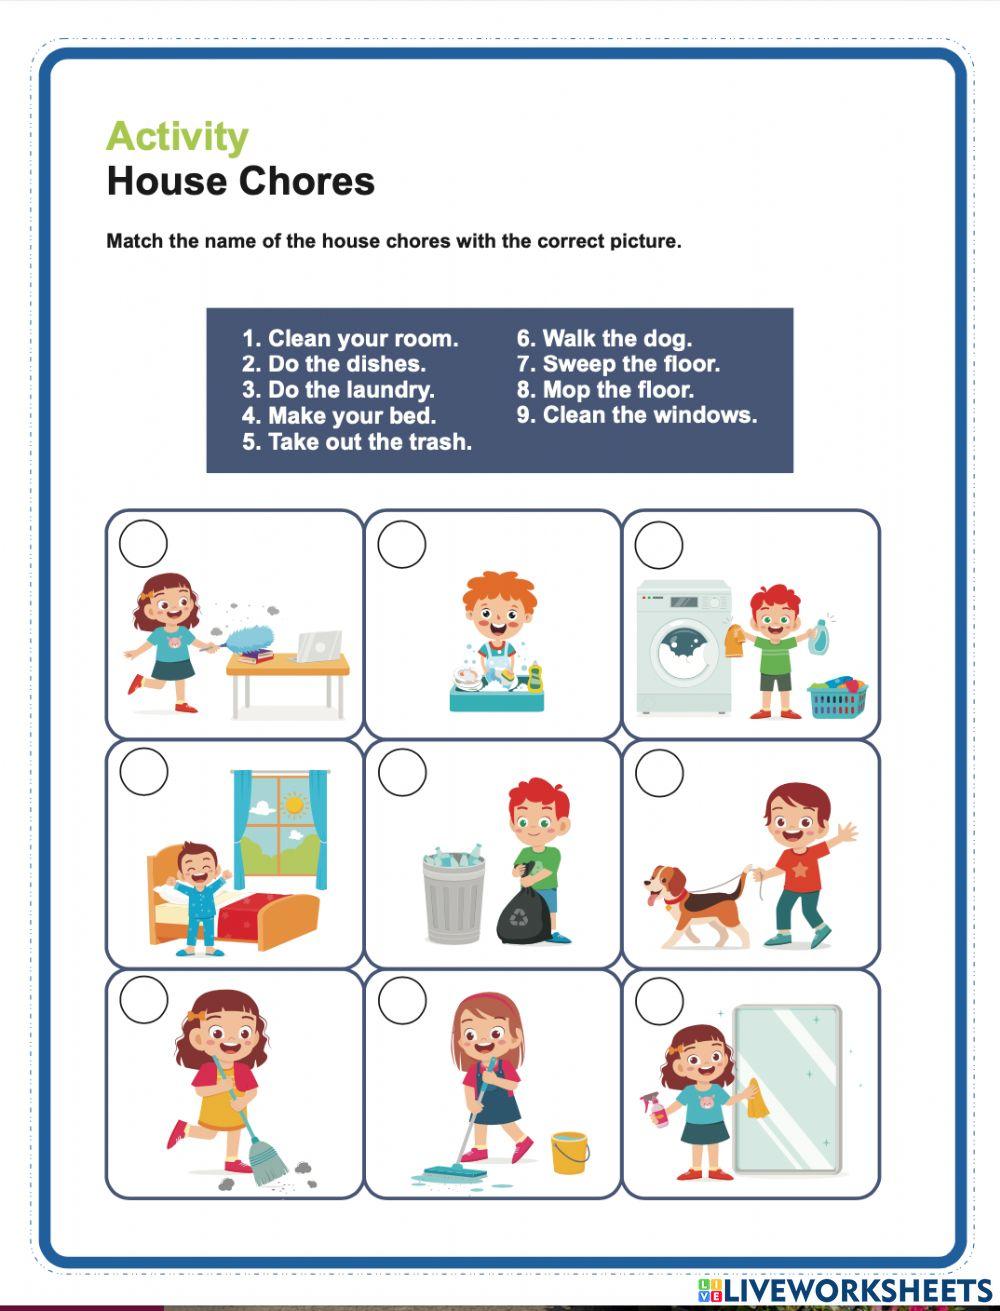 House chores